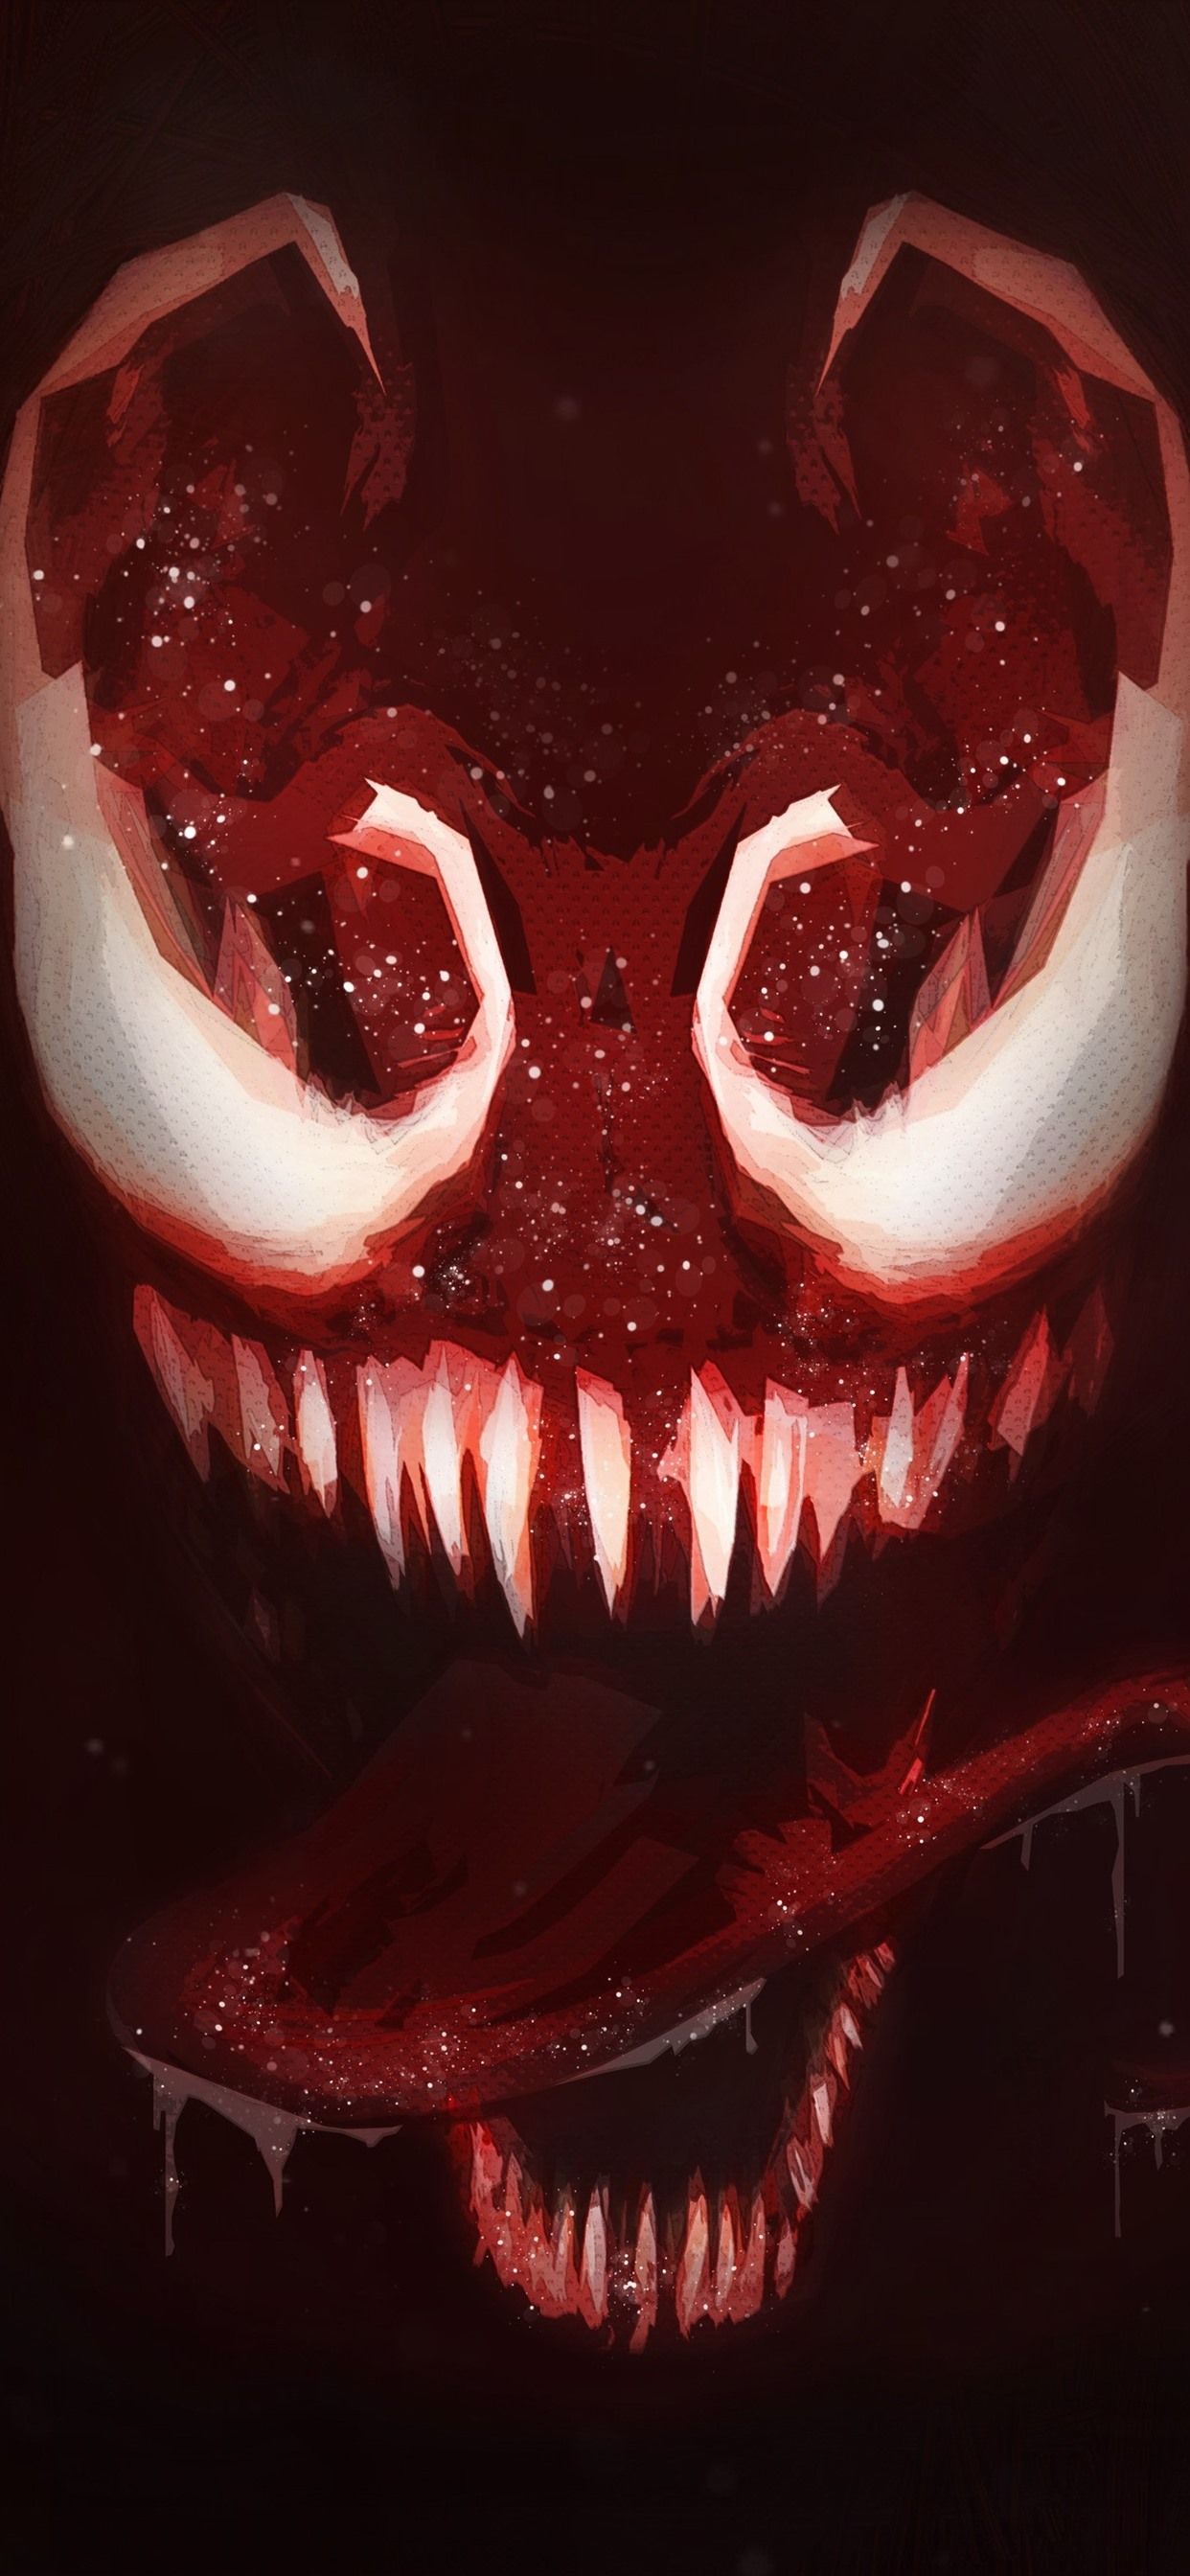 iPhone Wallpaper Venom, Teeth, Horror, Art Picture